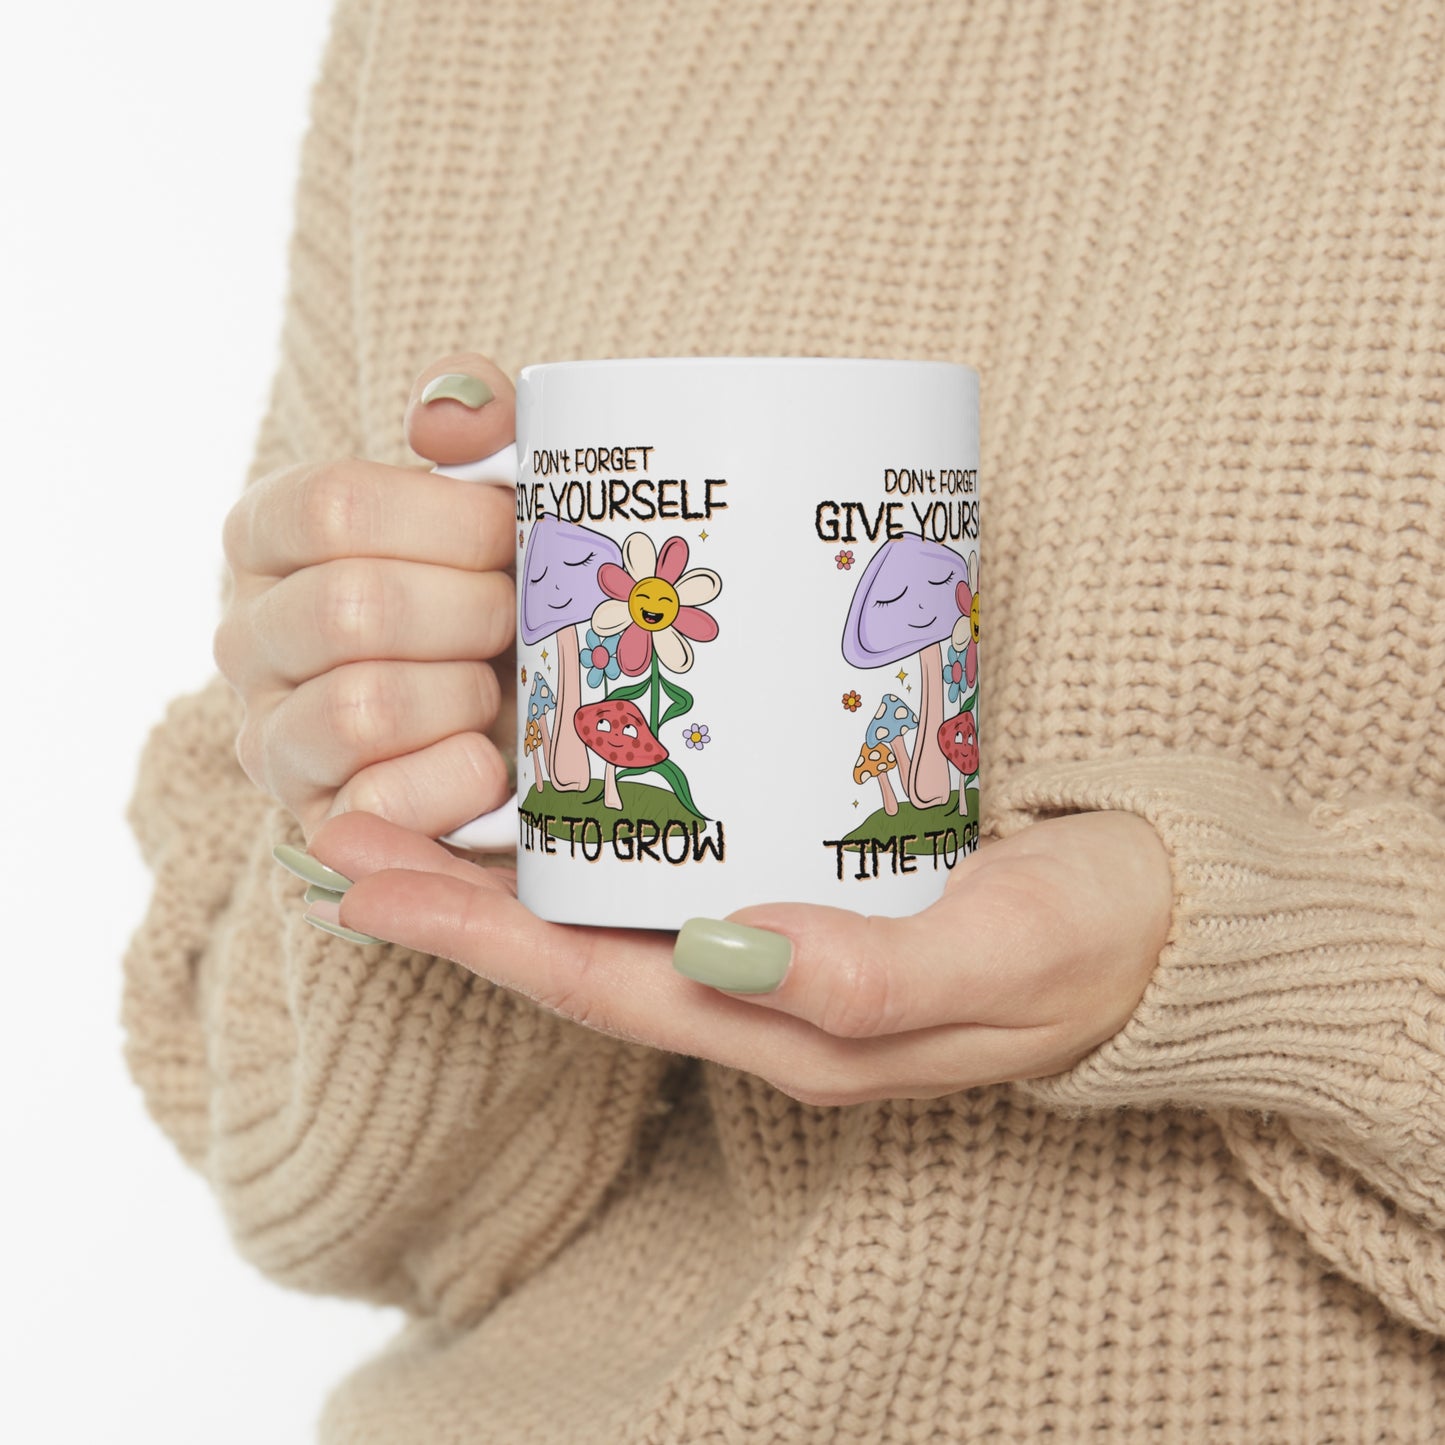 Retro Inspirational Coffee Mug, Give Yourself Time to Grow, Mushroom Flower Cup